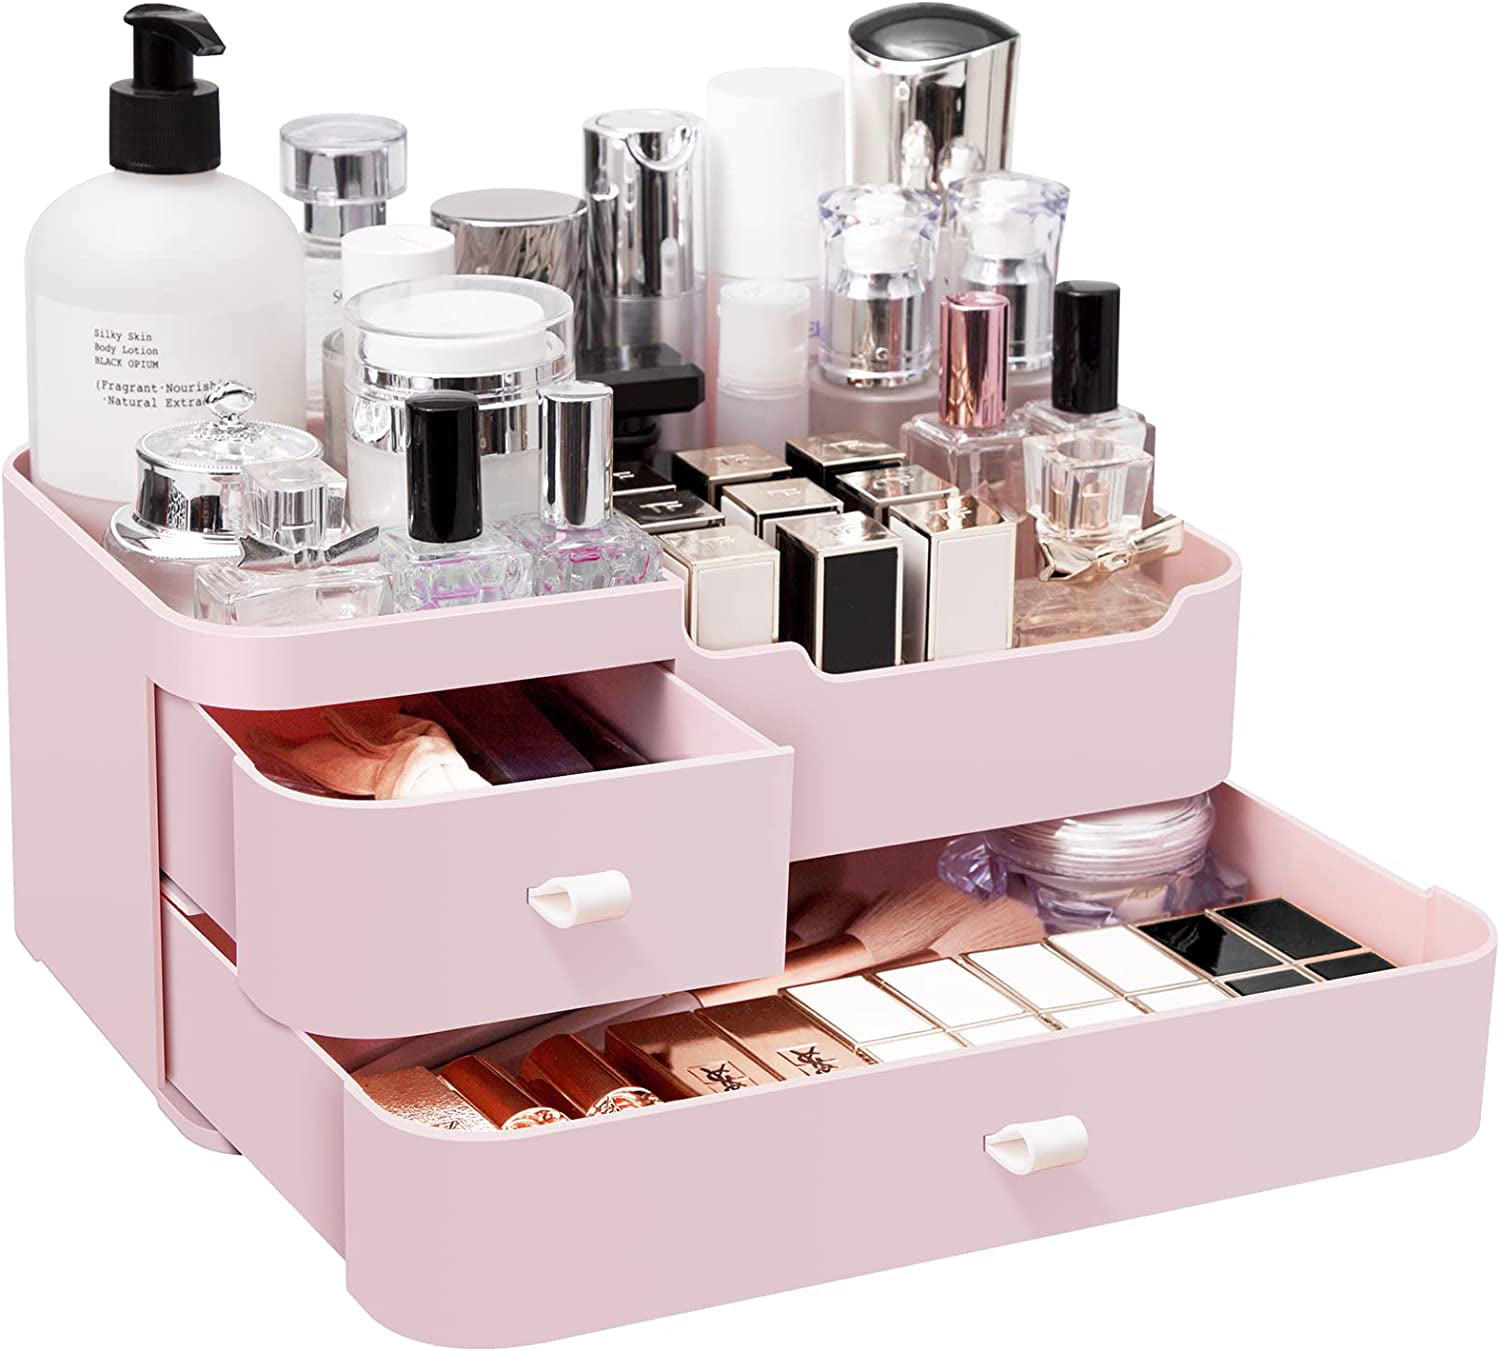 Makeup Storage Cosmetic Organizer: Makeup Organizer Beauty Product for - Cosmetic Organizer for Range 28*18*14.5CM Pink Walmart.com